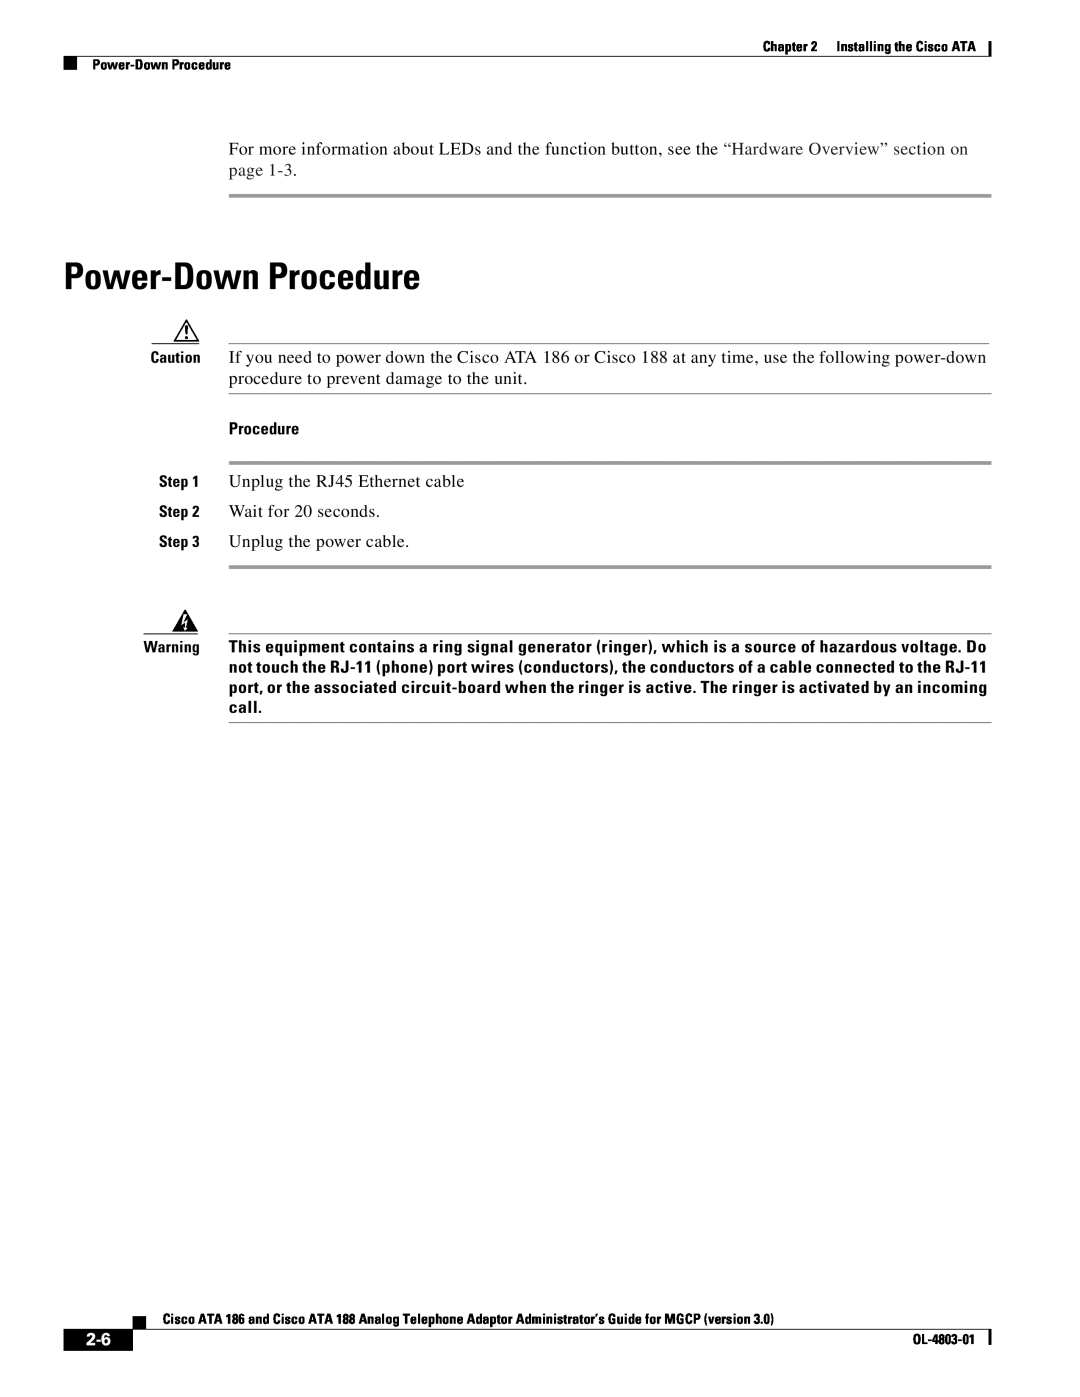 Cisco Systems ATA 186, ATA 188 manual Power-Down Procedure 